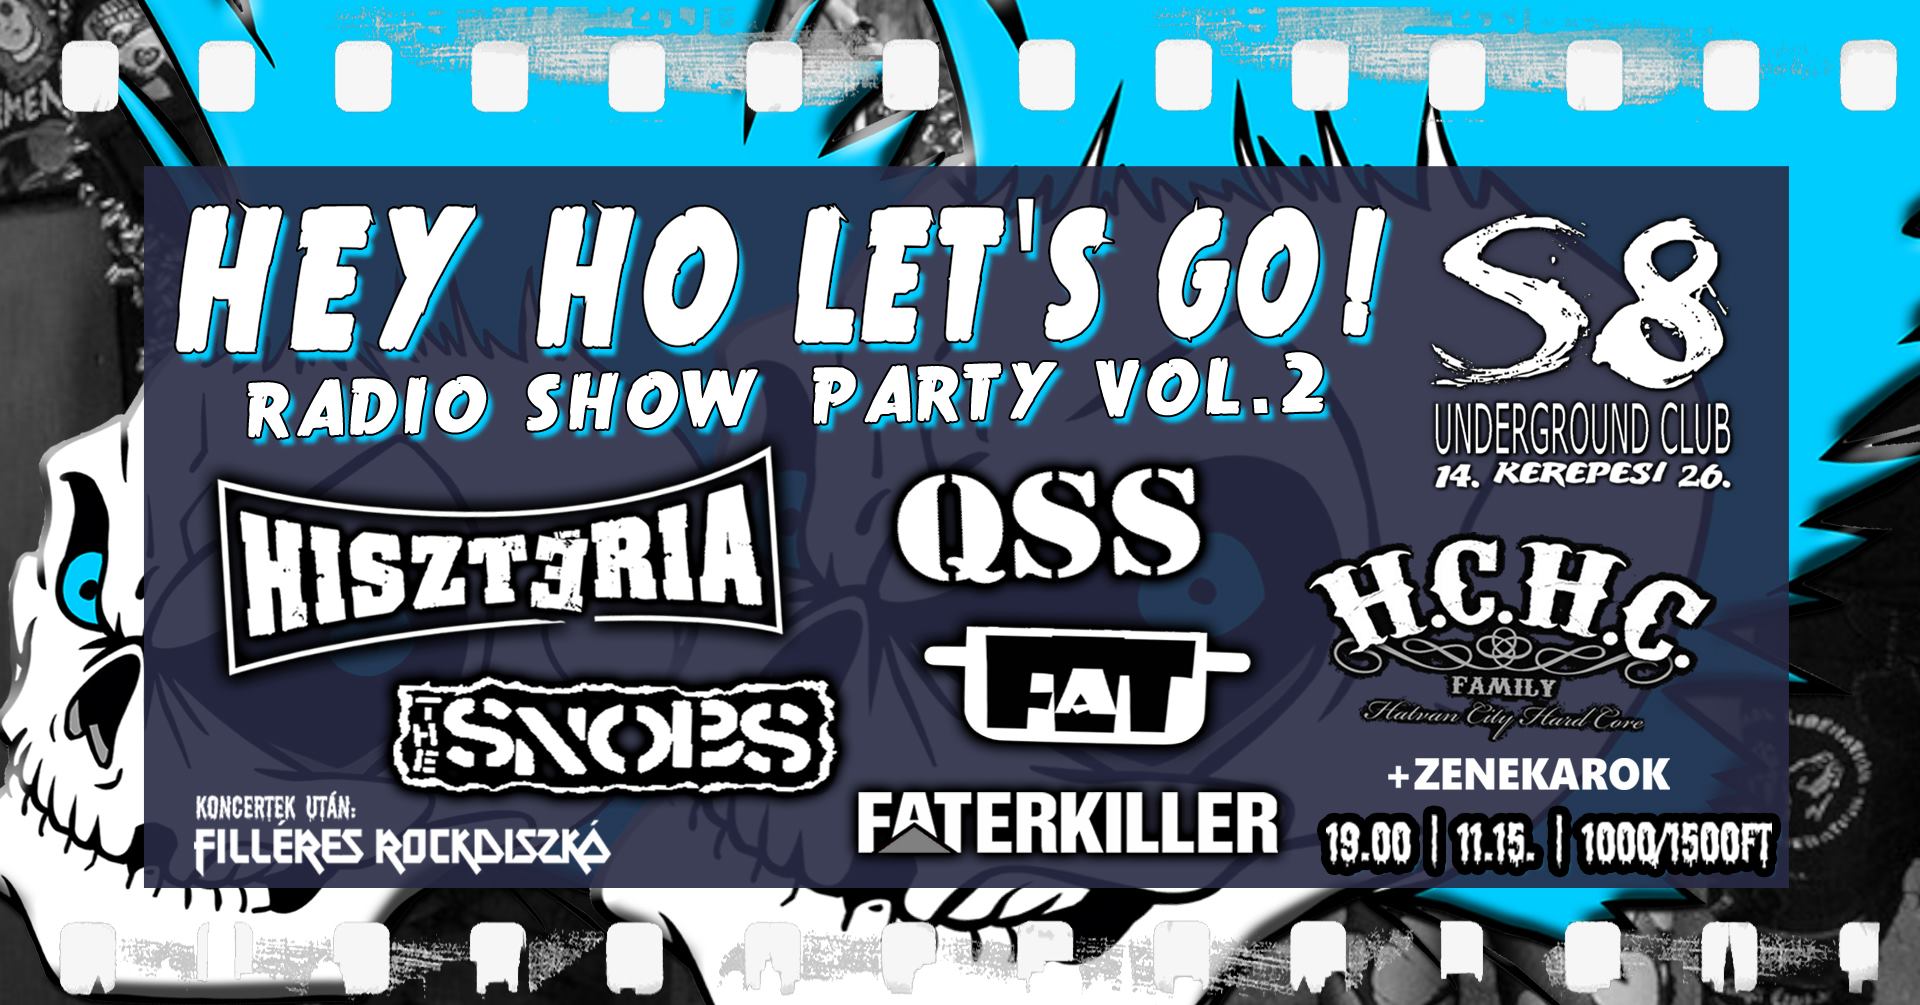 Hey ho let's go! - Radio Show Party vol2